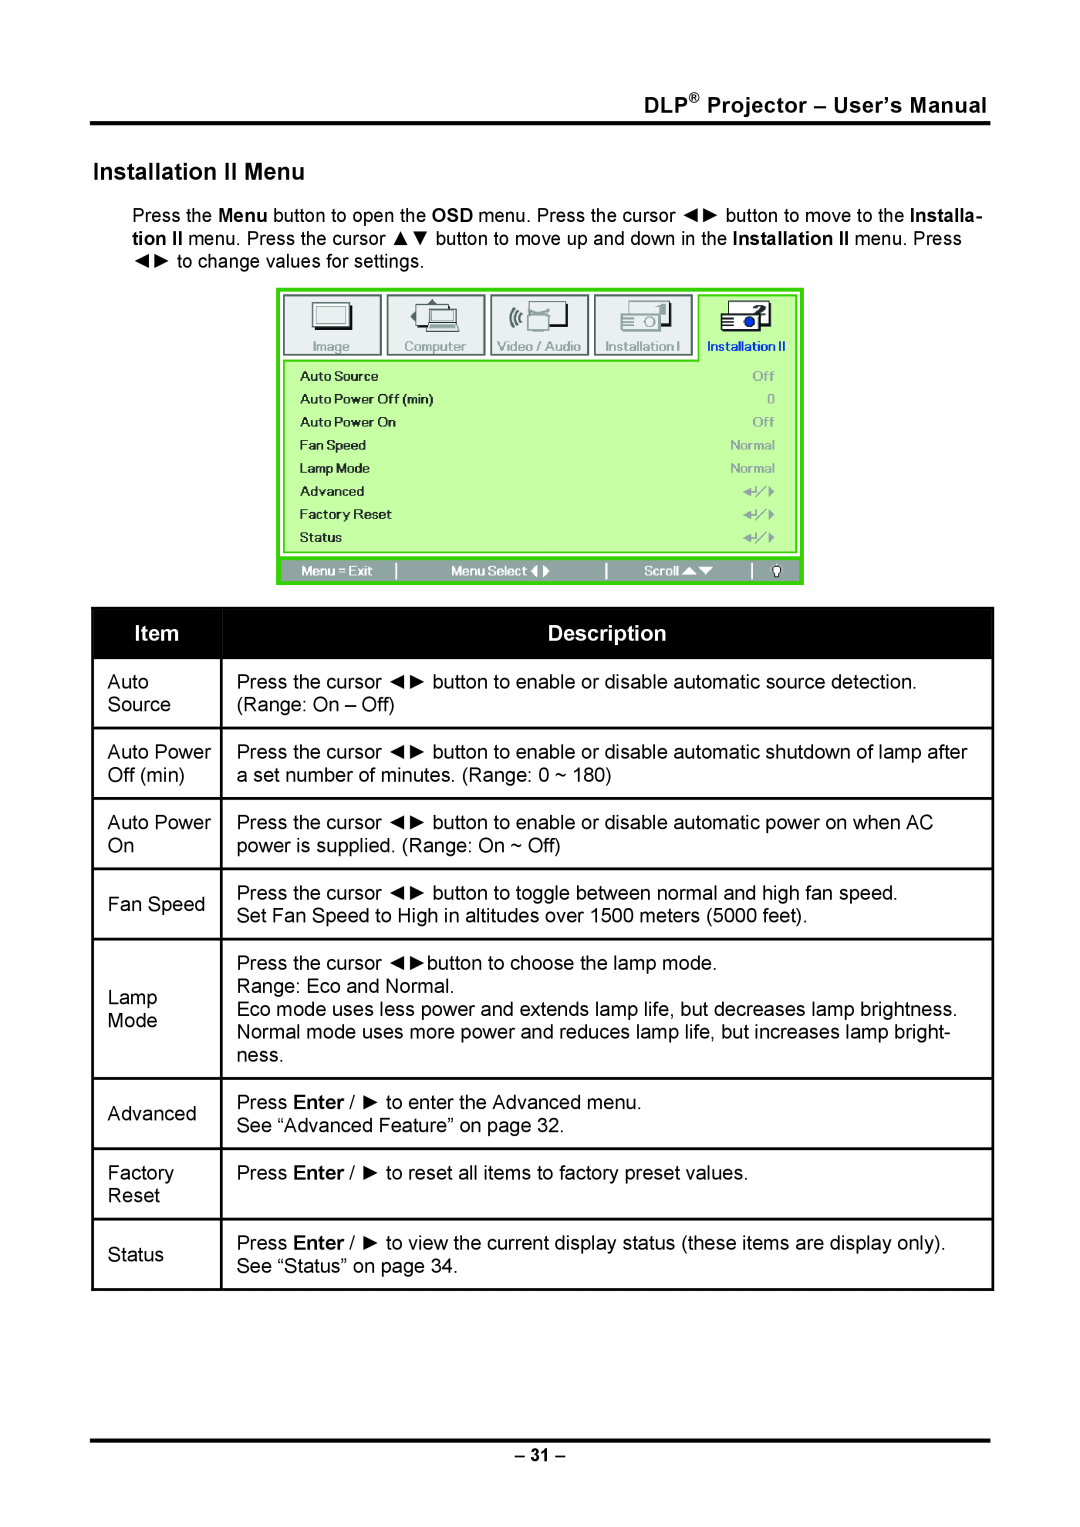 Planar PR5030 manual Installation II Menu, DLP Projector - User’s Manual, Description 